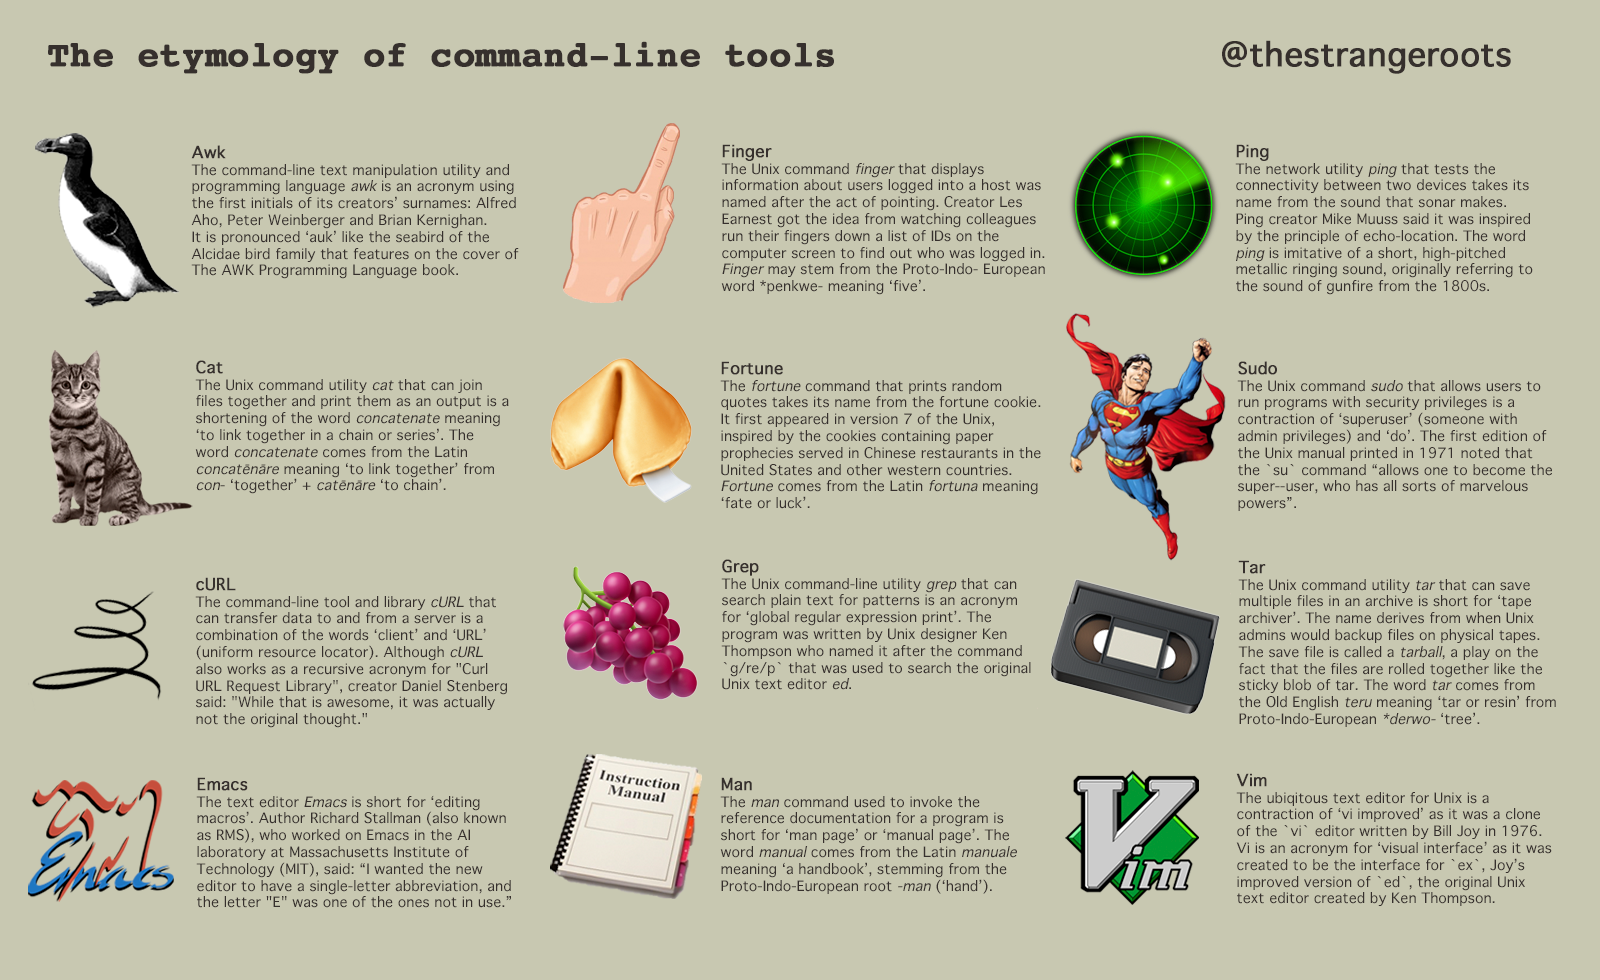 Command-line tools